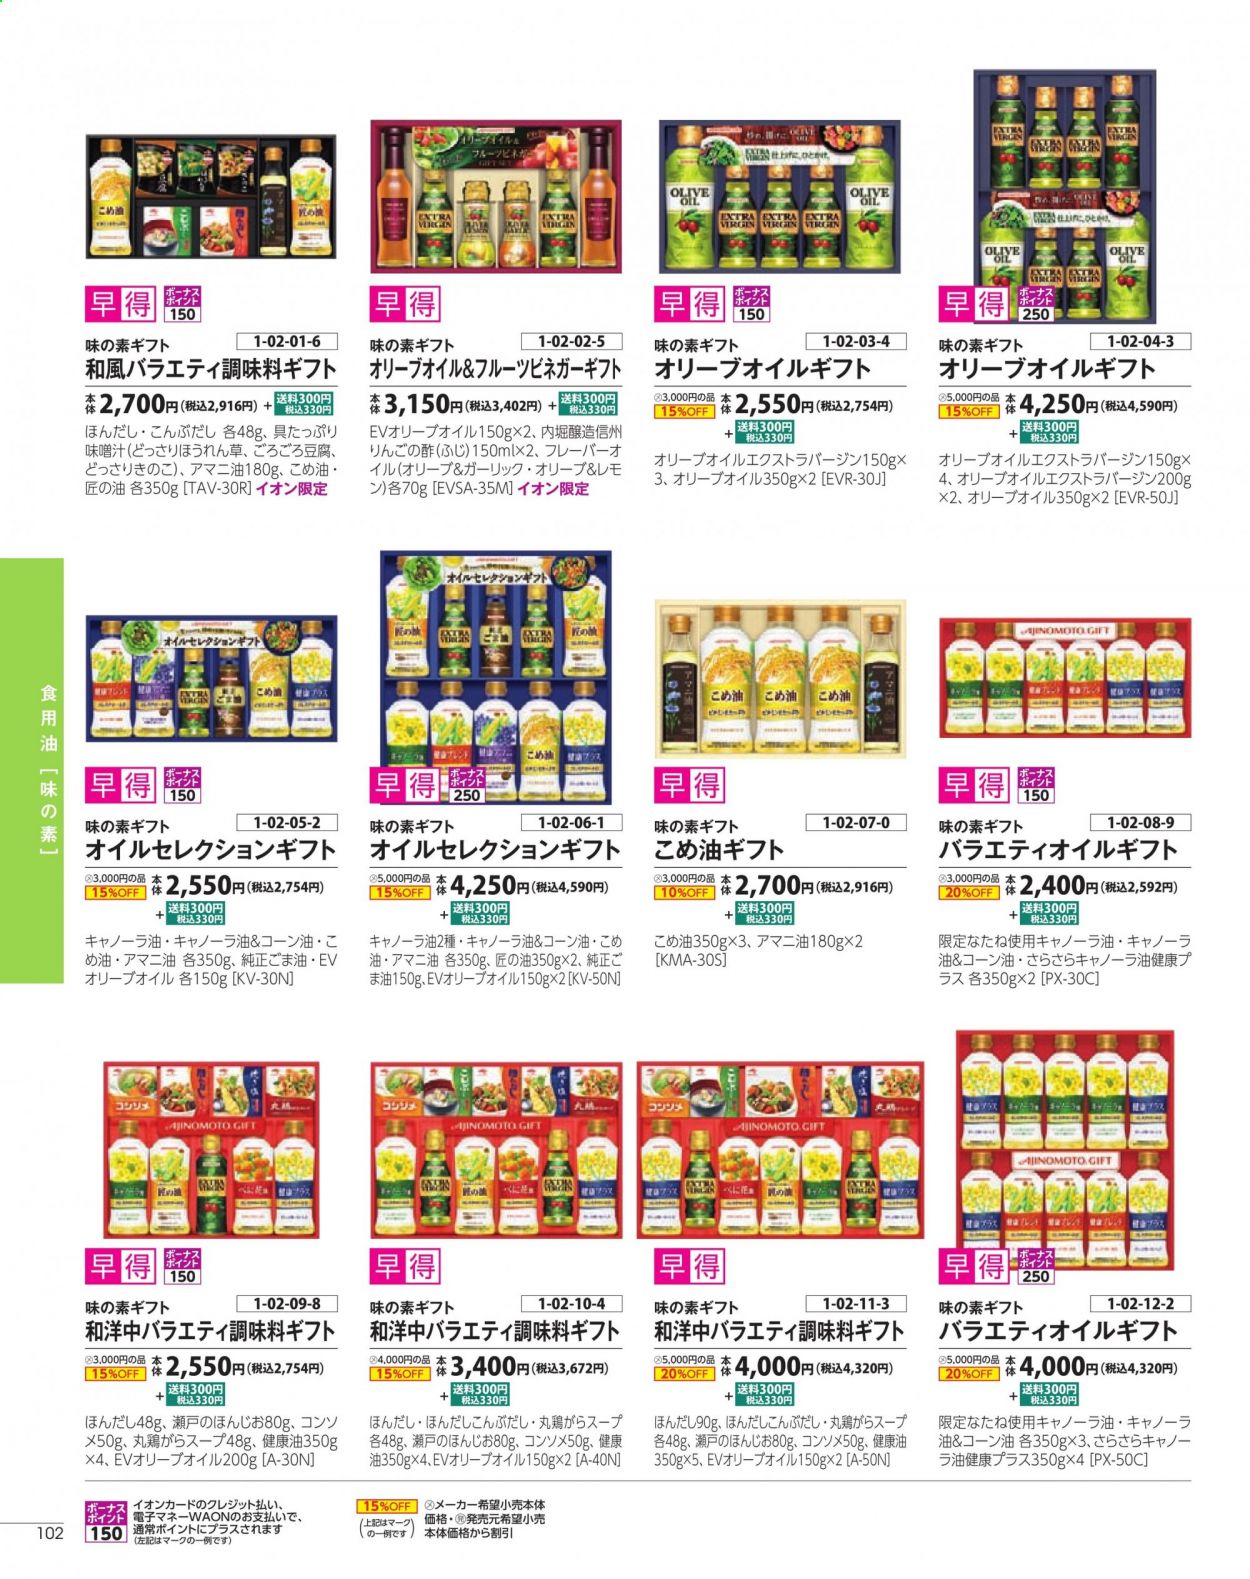 thumbnail - イオンチラシ - セール製品 - オリーブオイル, キャノーラ油, 純正ごま油, 豆腐。ページ102。